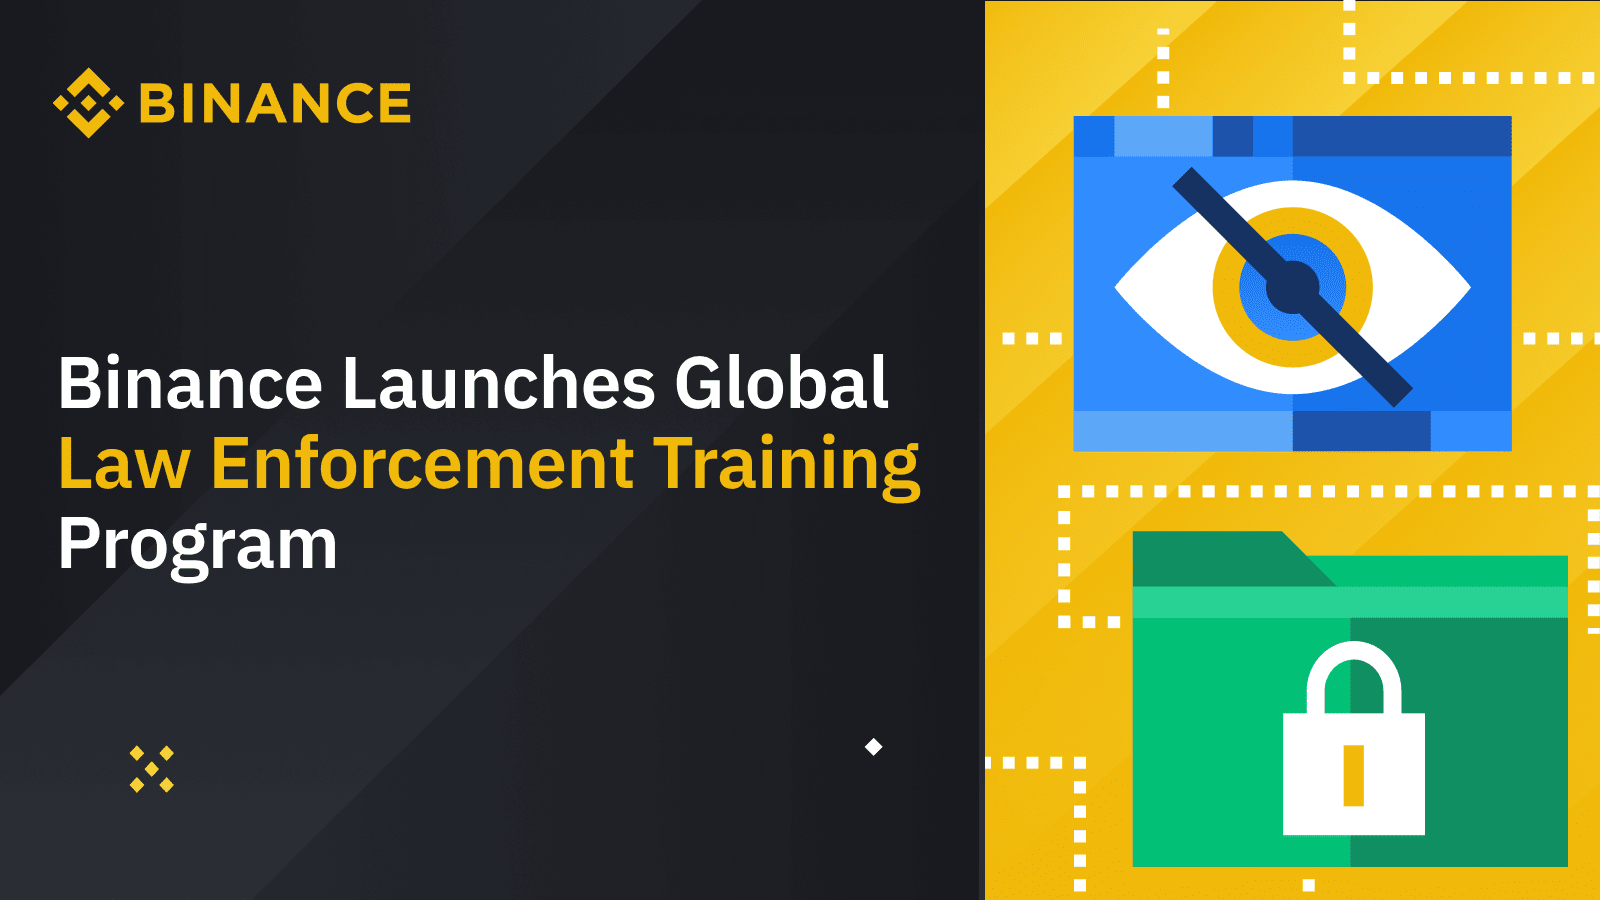 Binance launches Global Law Enforcement Training Program